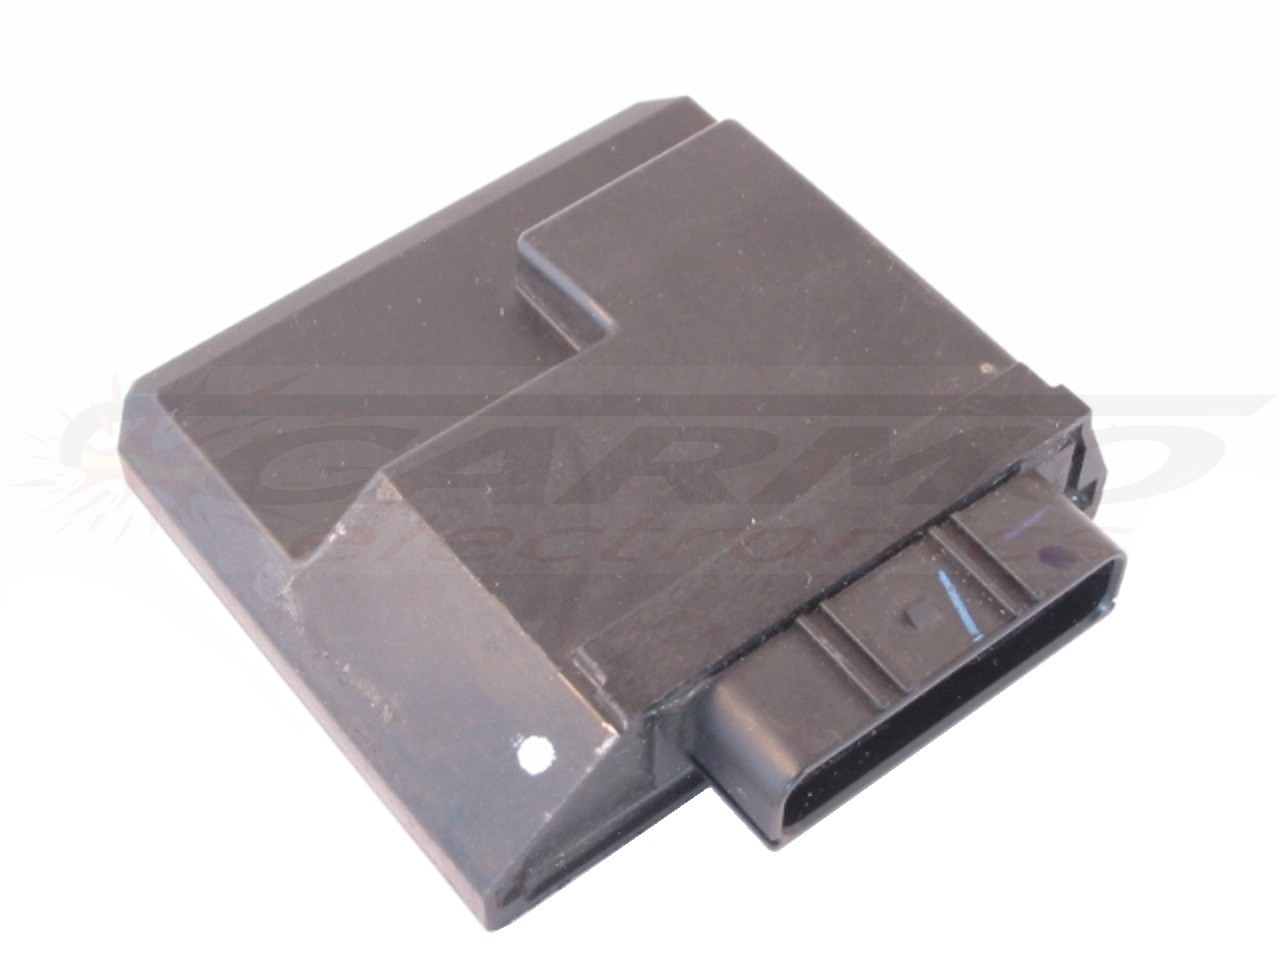 RMZ250 RMZ 250 RM-Z250 igniter ignition module CDI Box (32920-49H01, 32920-49H20, 32920-49H30)